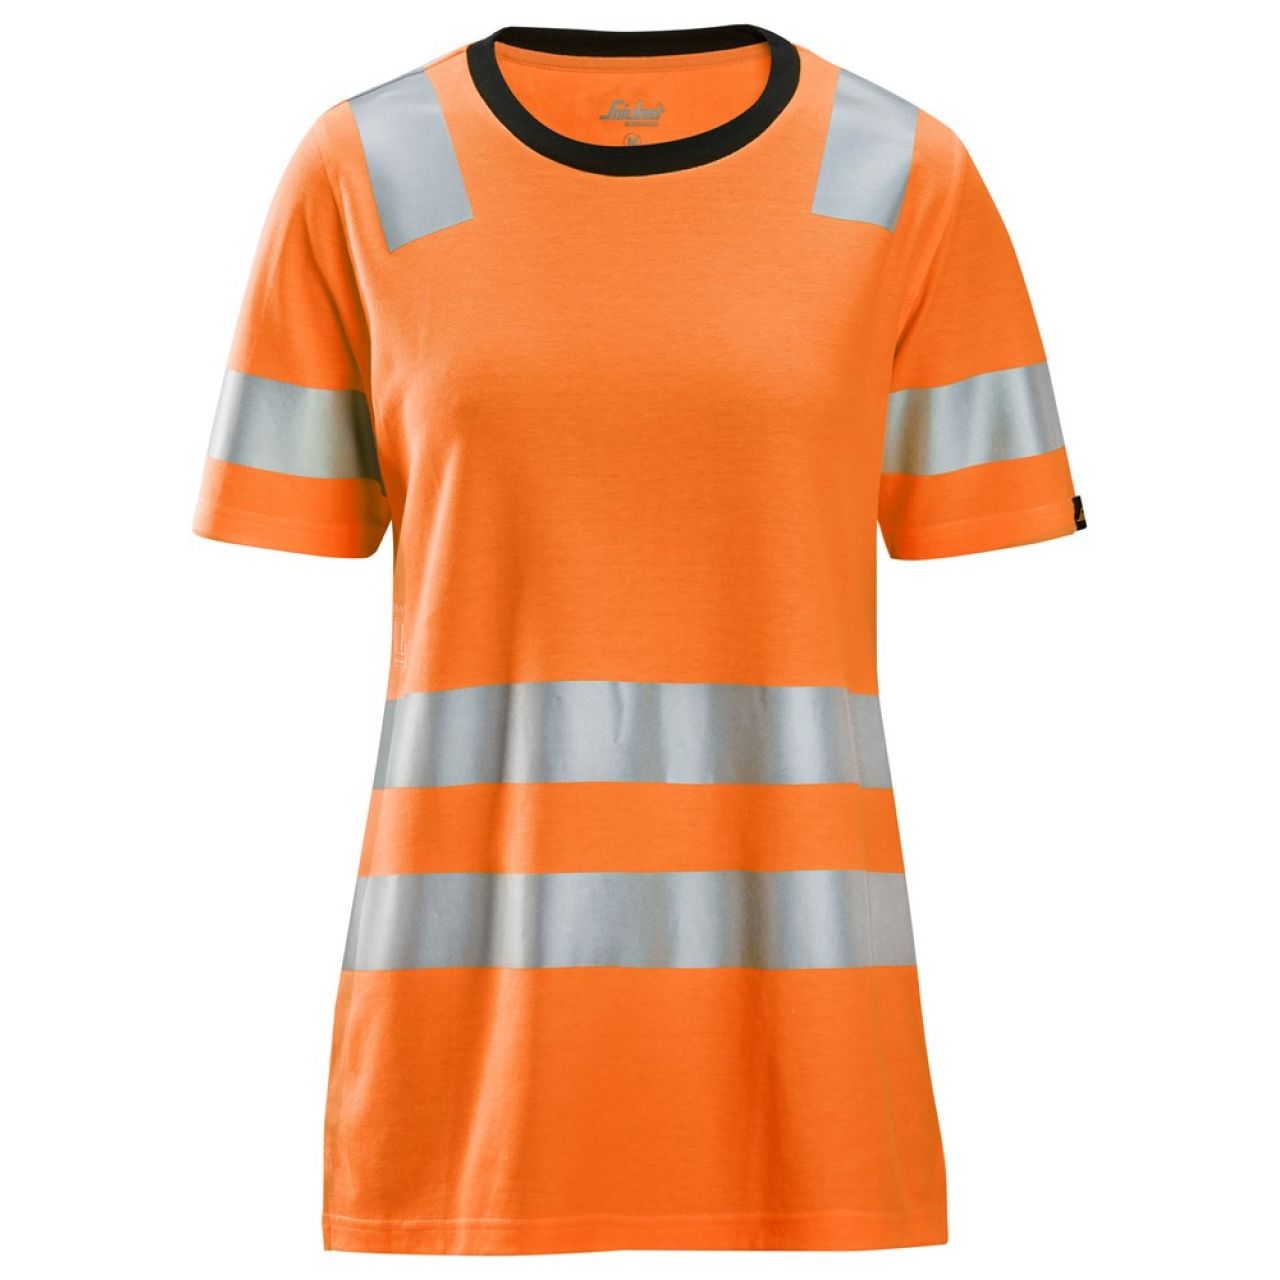 2537 Camiseta de manga corta para mujer de alta visibilidad clase 2 naranja talla L